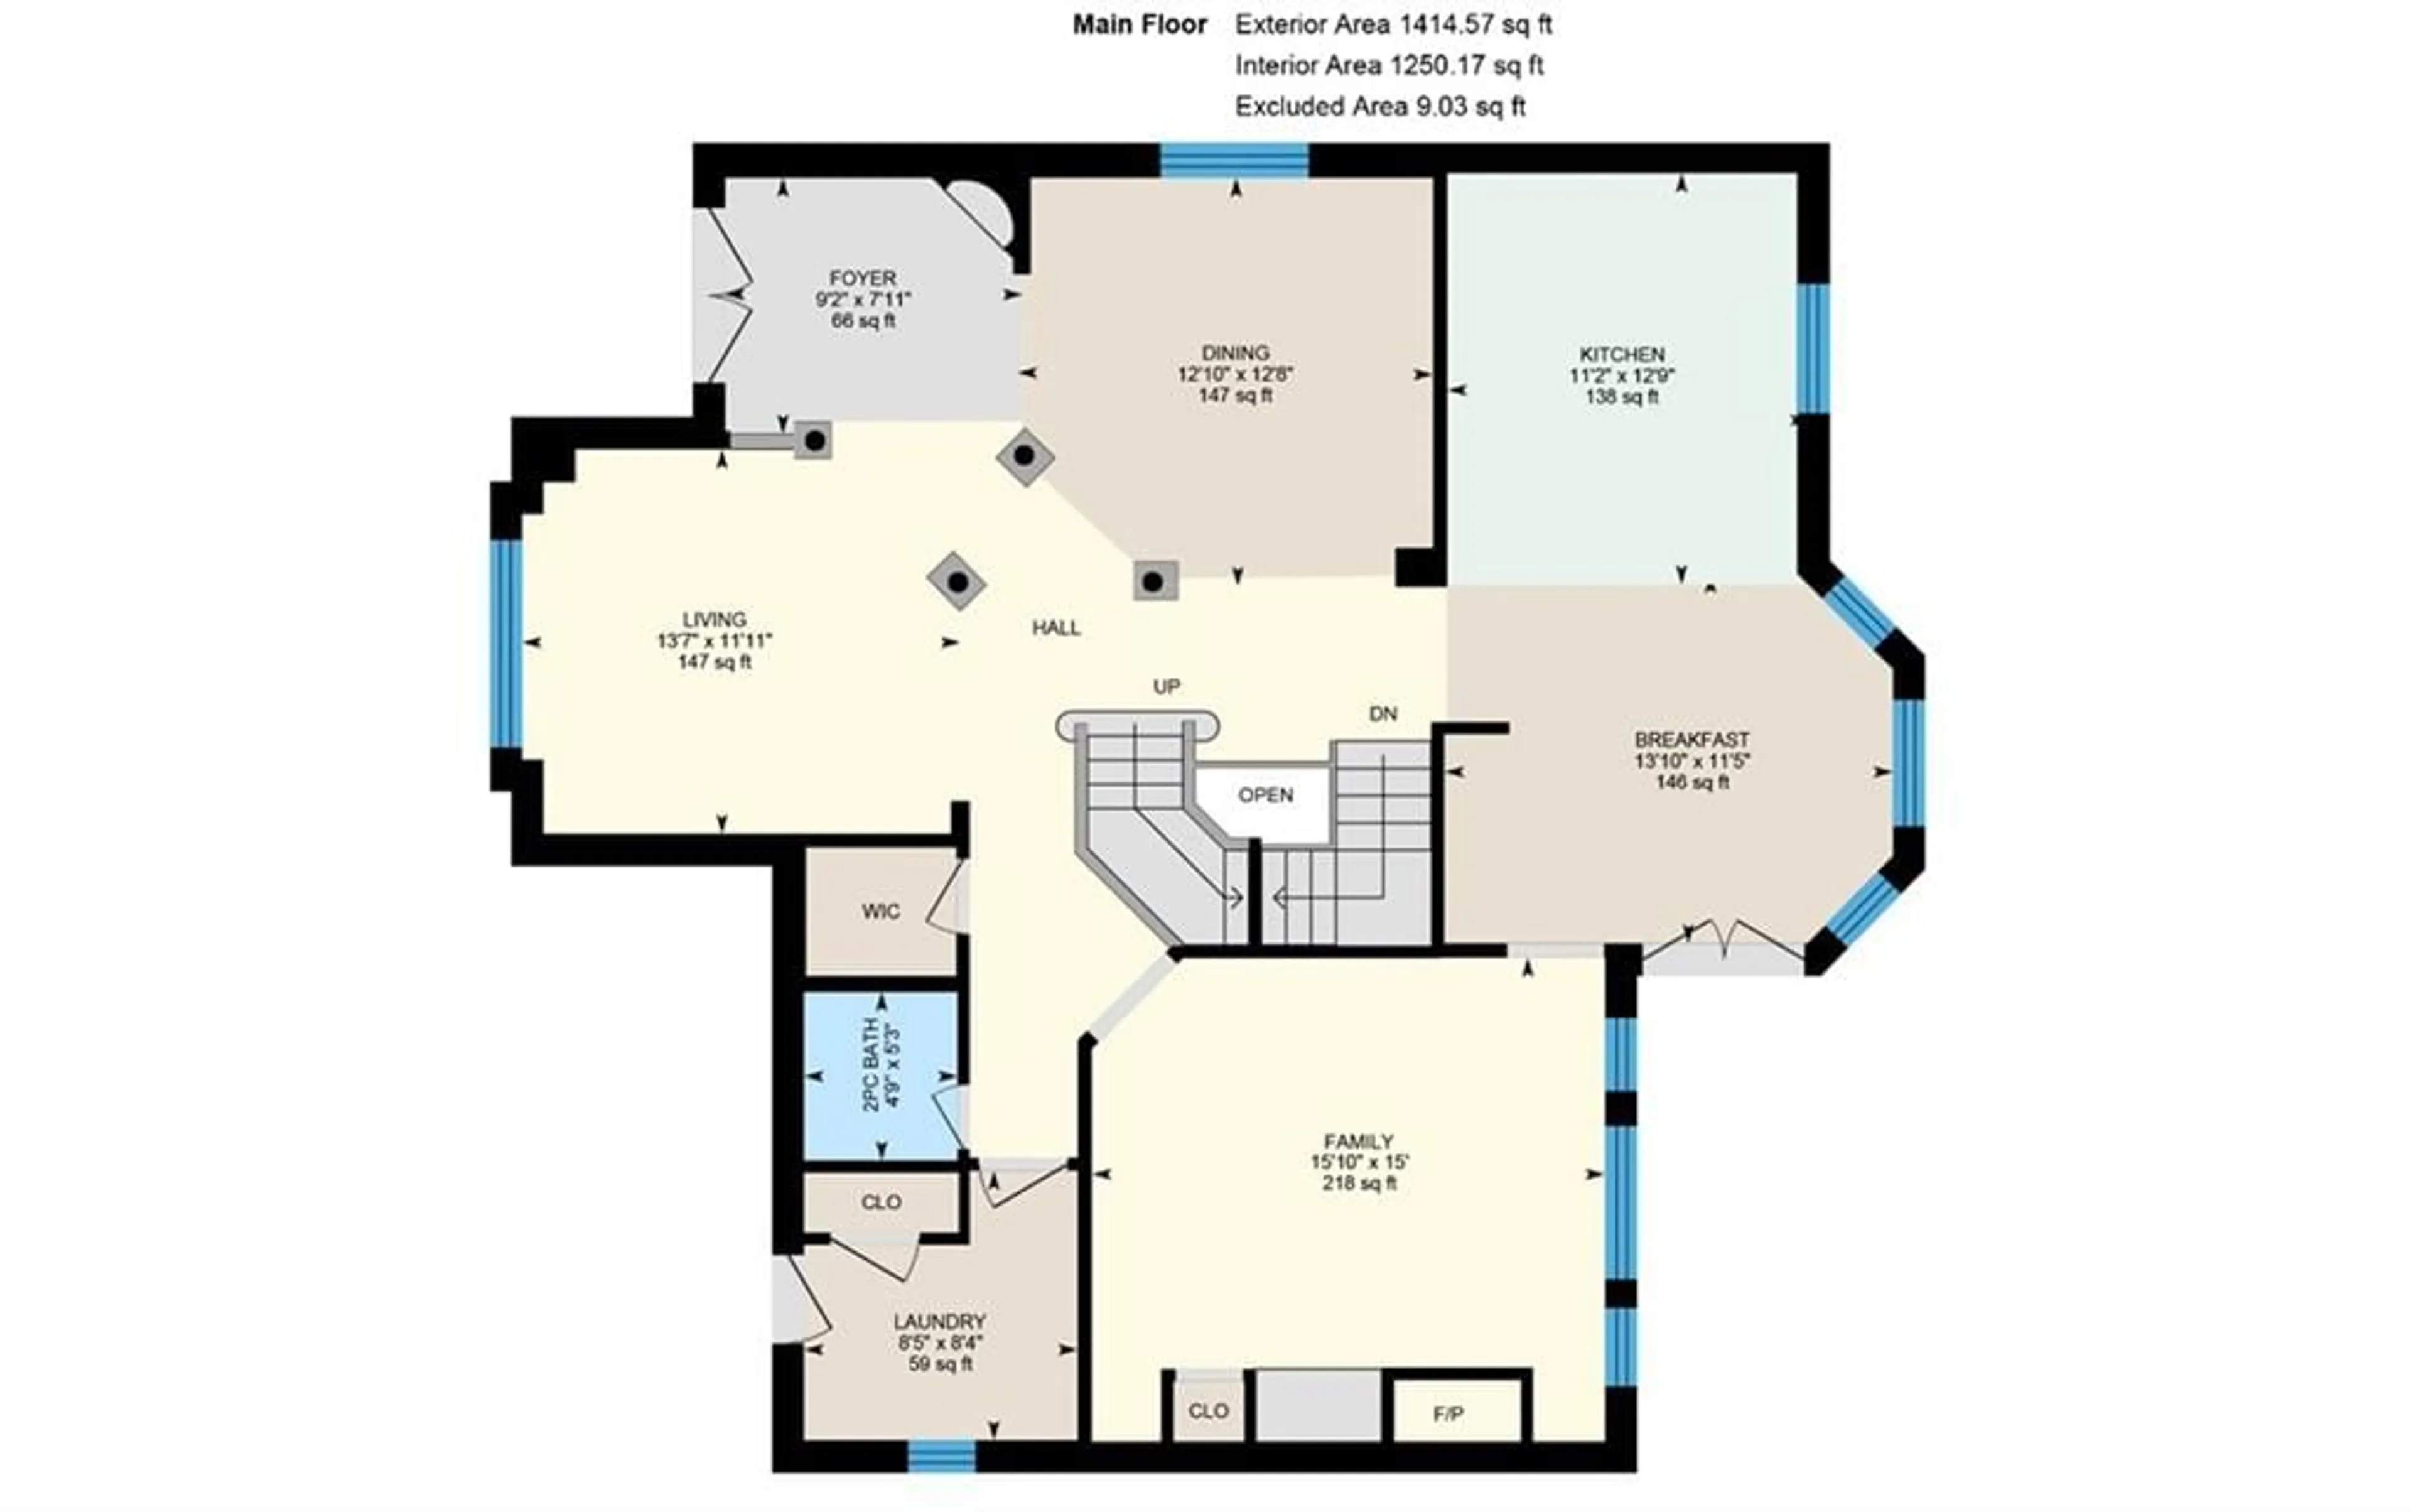 Floor plan for 30 Birkhall Pl, Barrie Ontario L4N 0K6